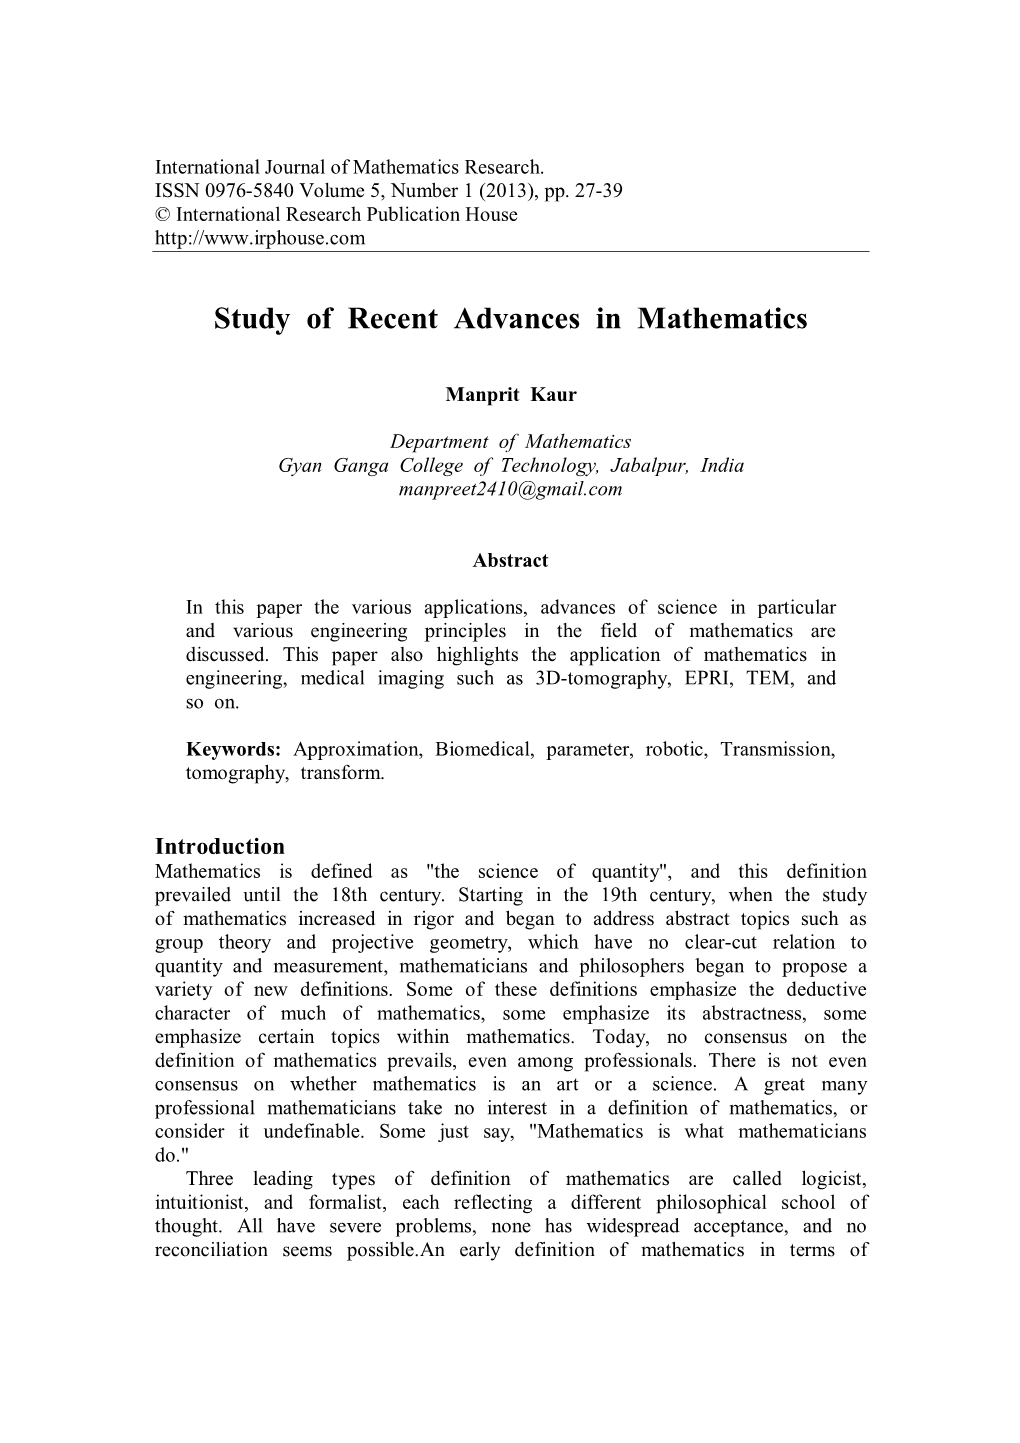 Study of Recent Advances in Mathematics